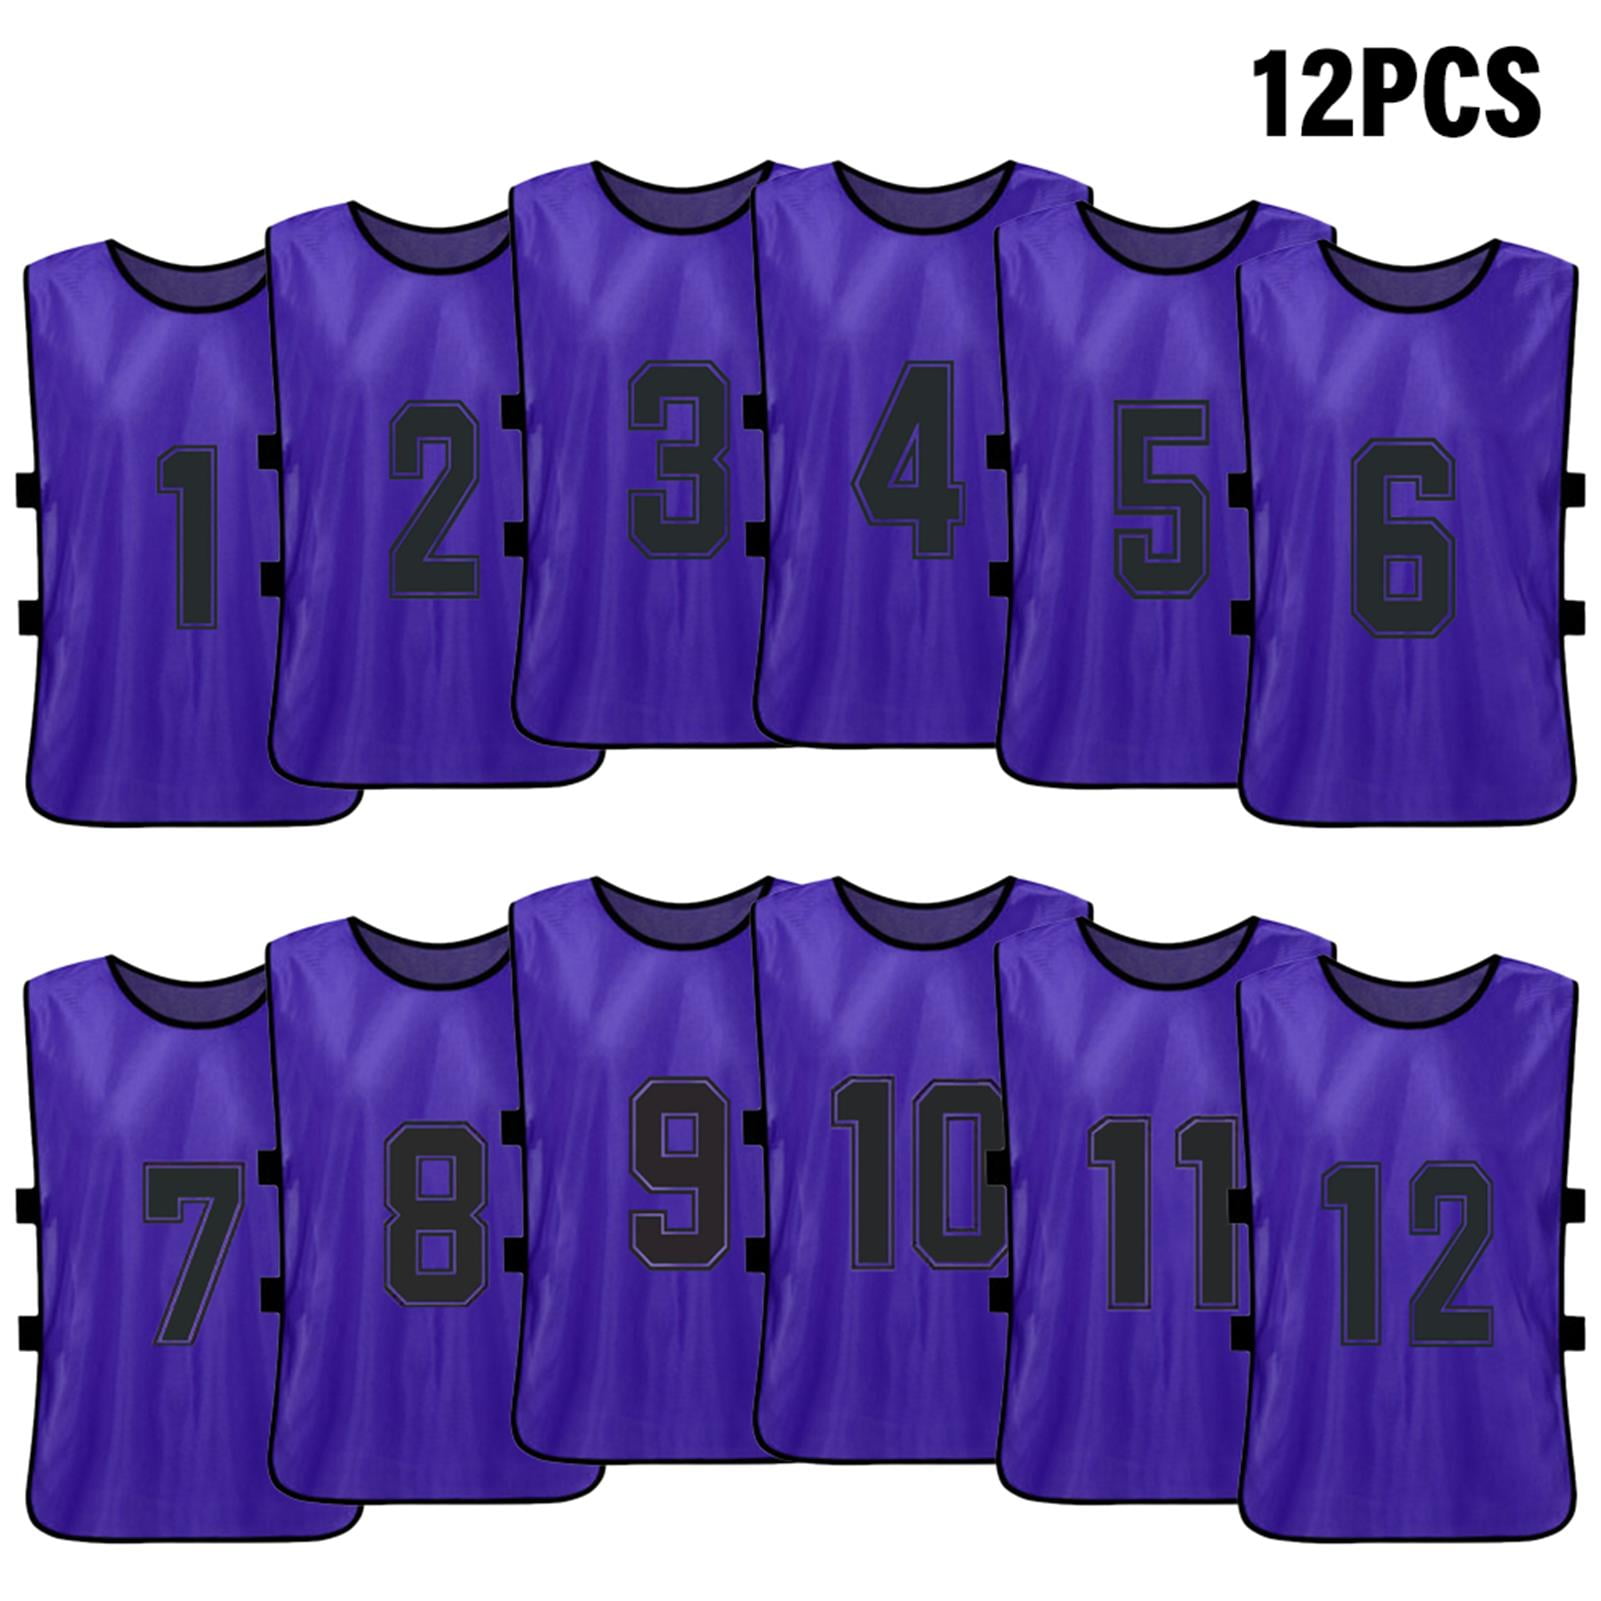 12 PCS Adults Soccer Pinnies Quick Dry Jerseys Team Scrimmage Football Vest E4D7 